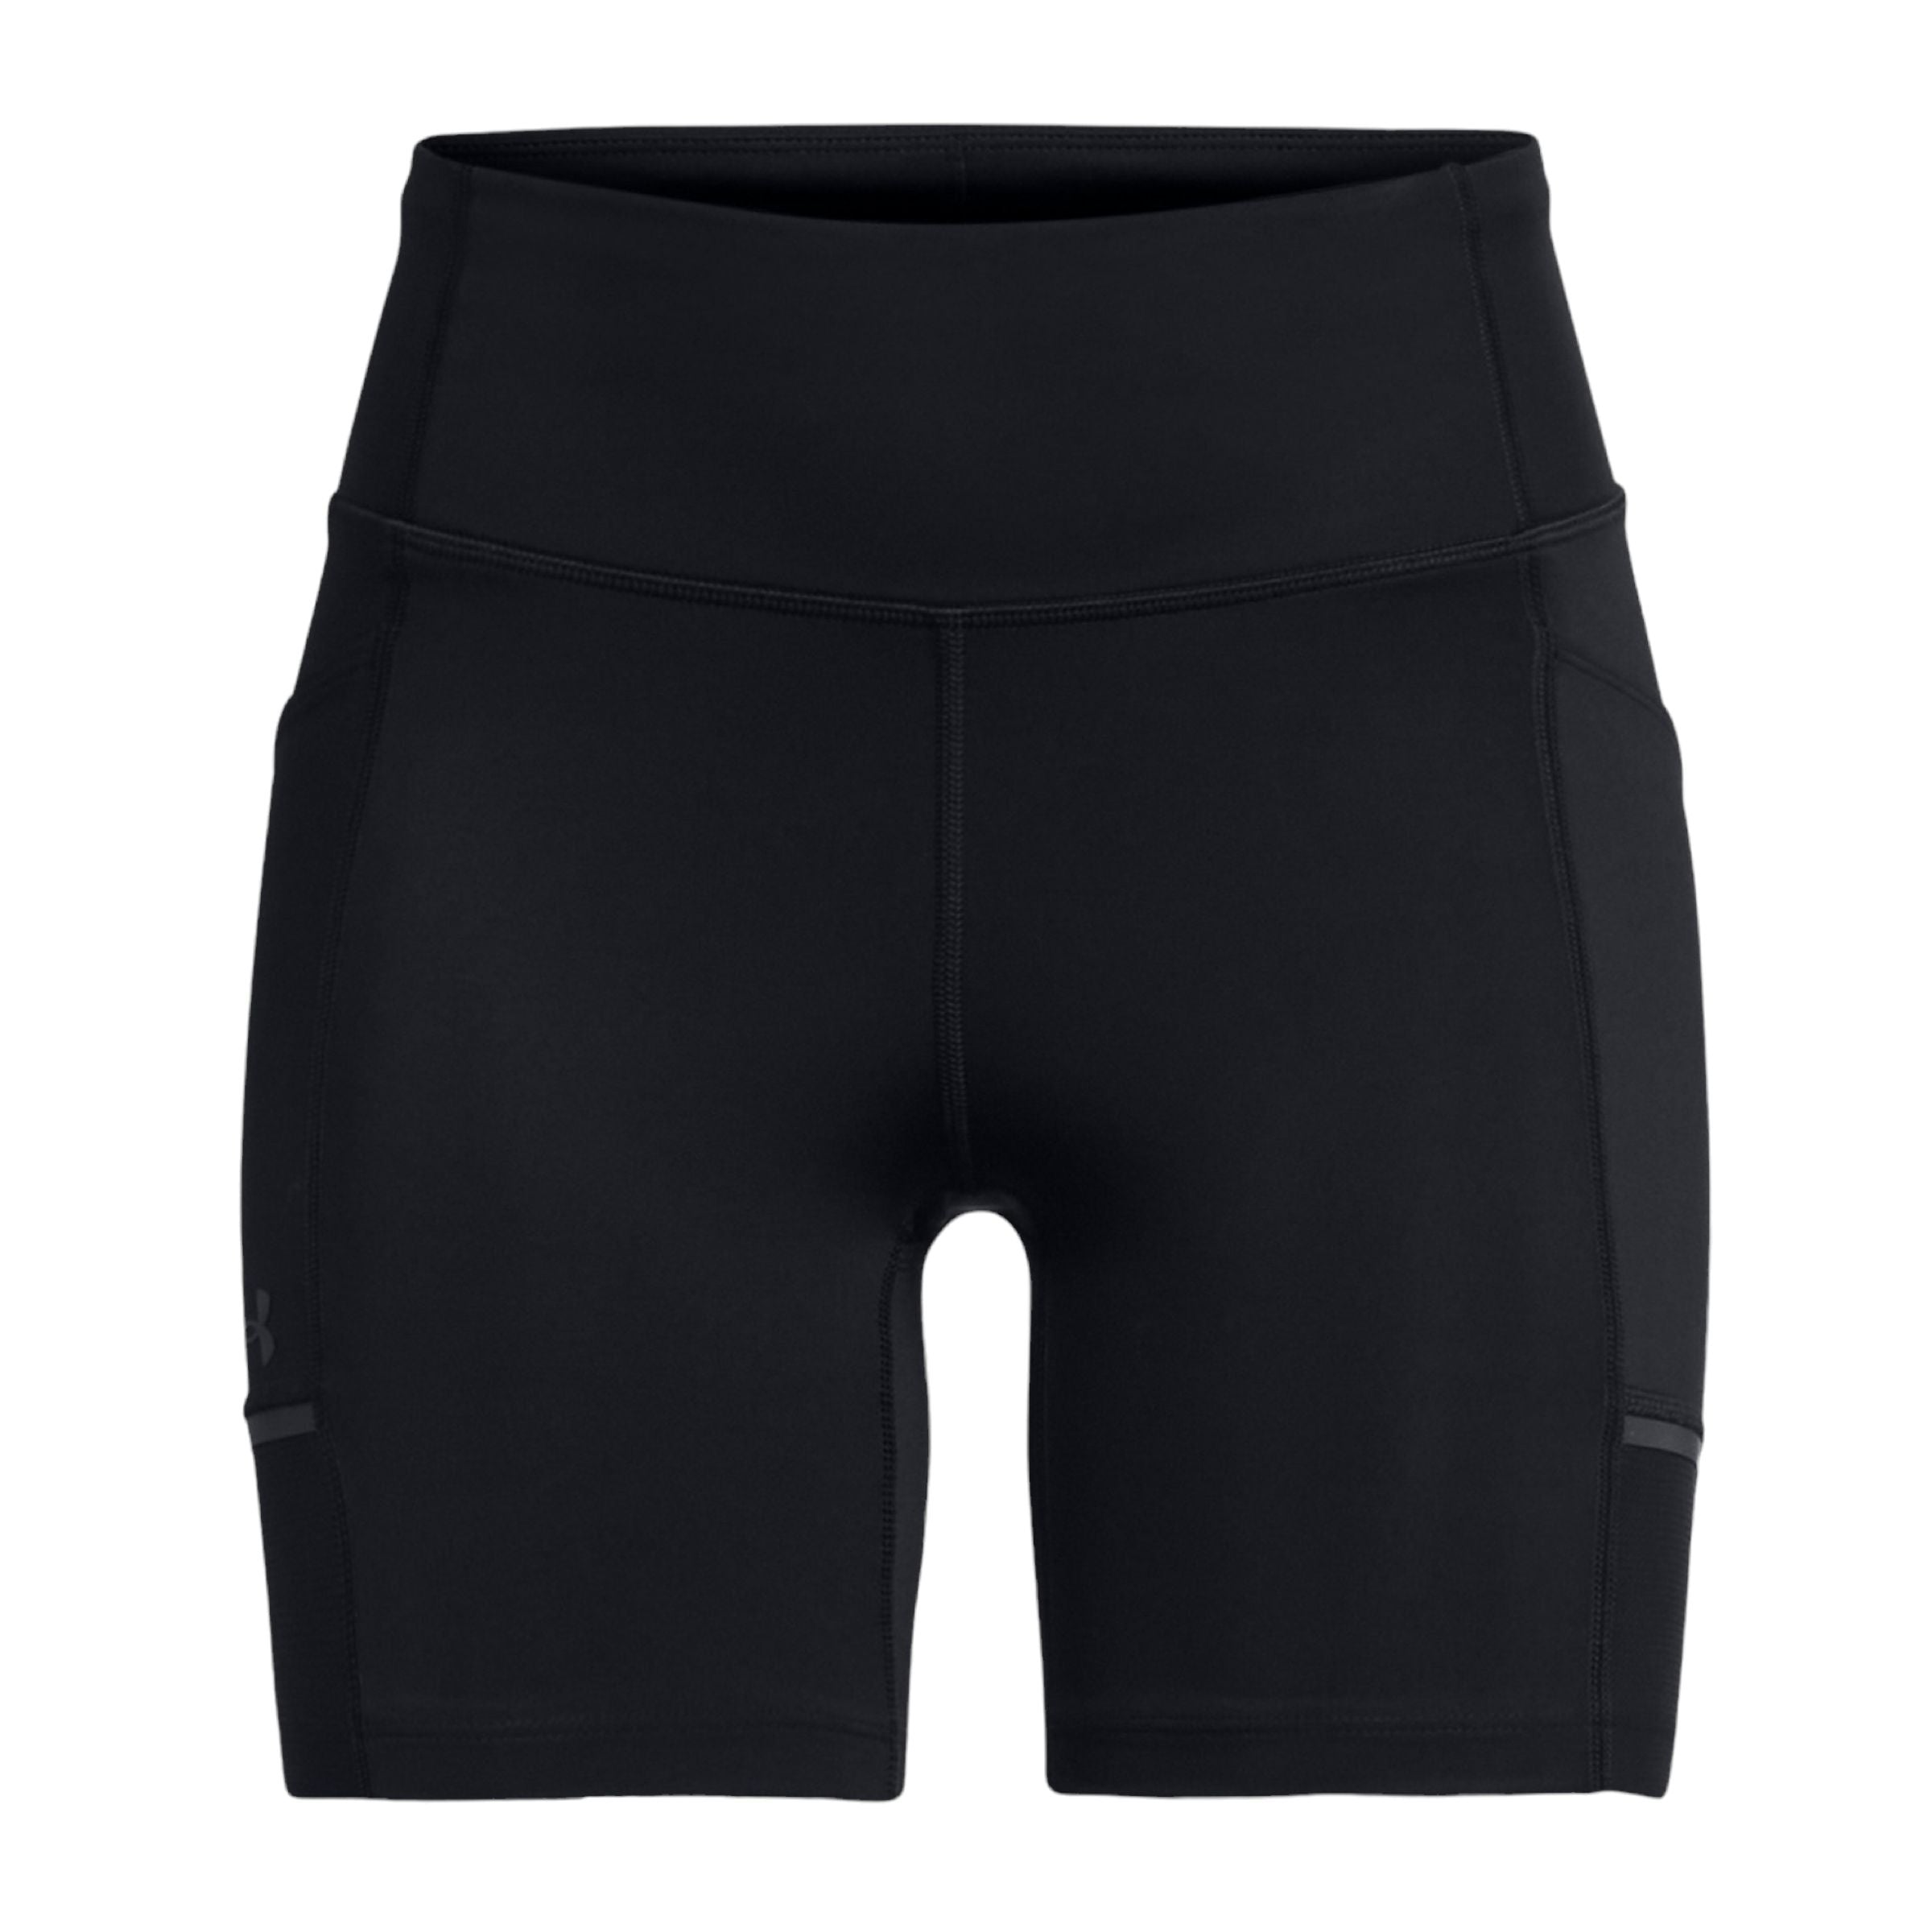 Women's Launch 6 IN Shorts Black/Reflective 